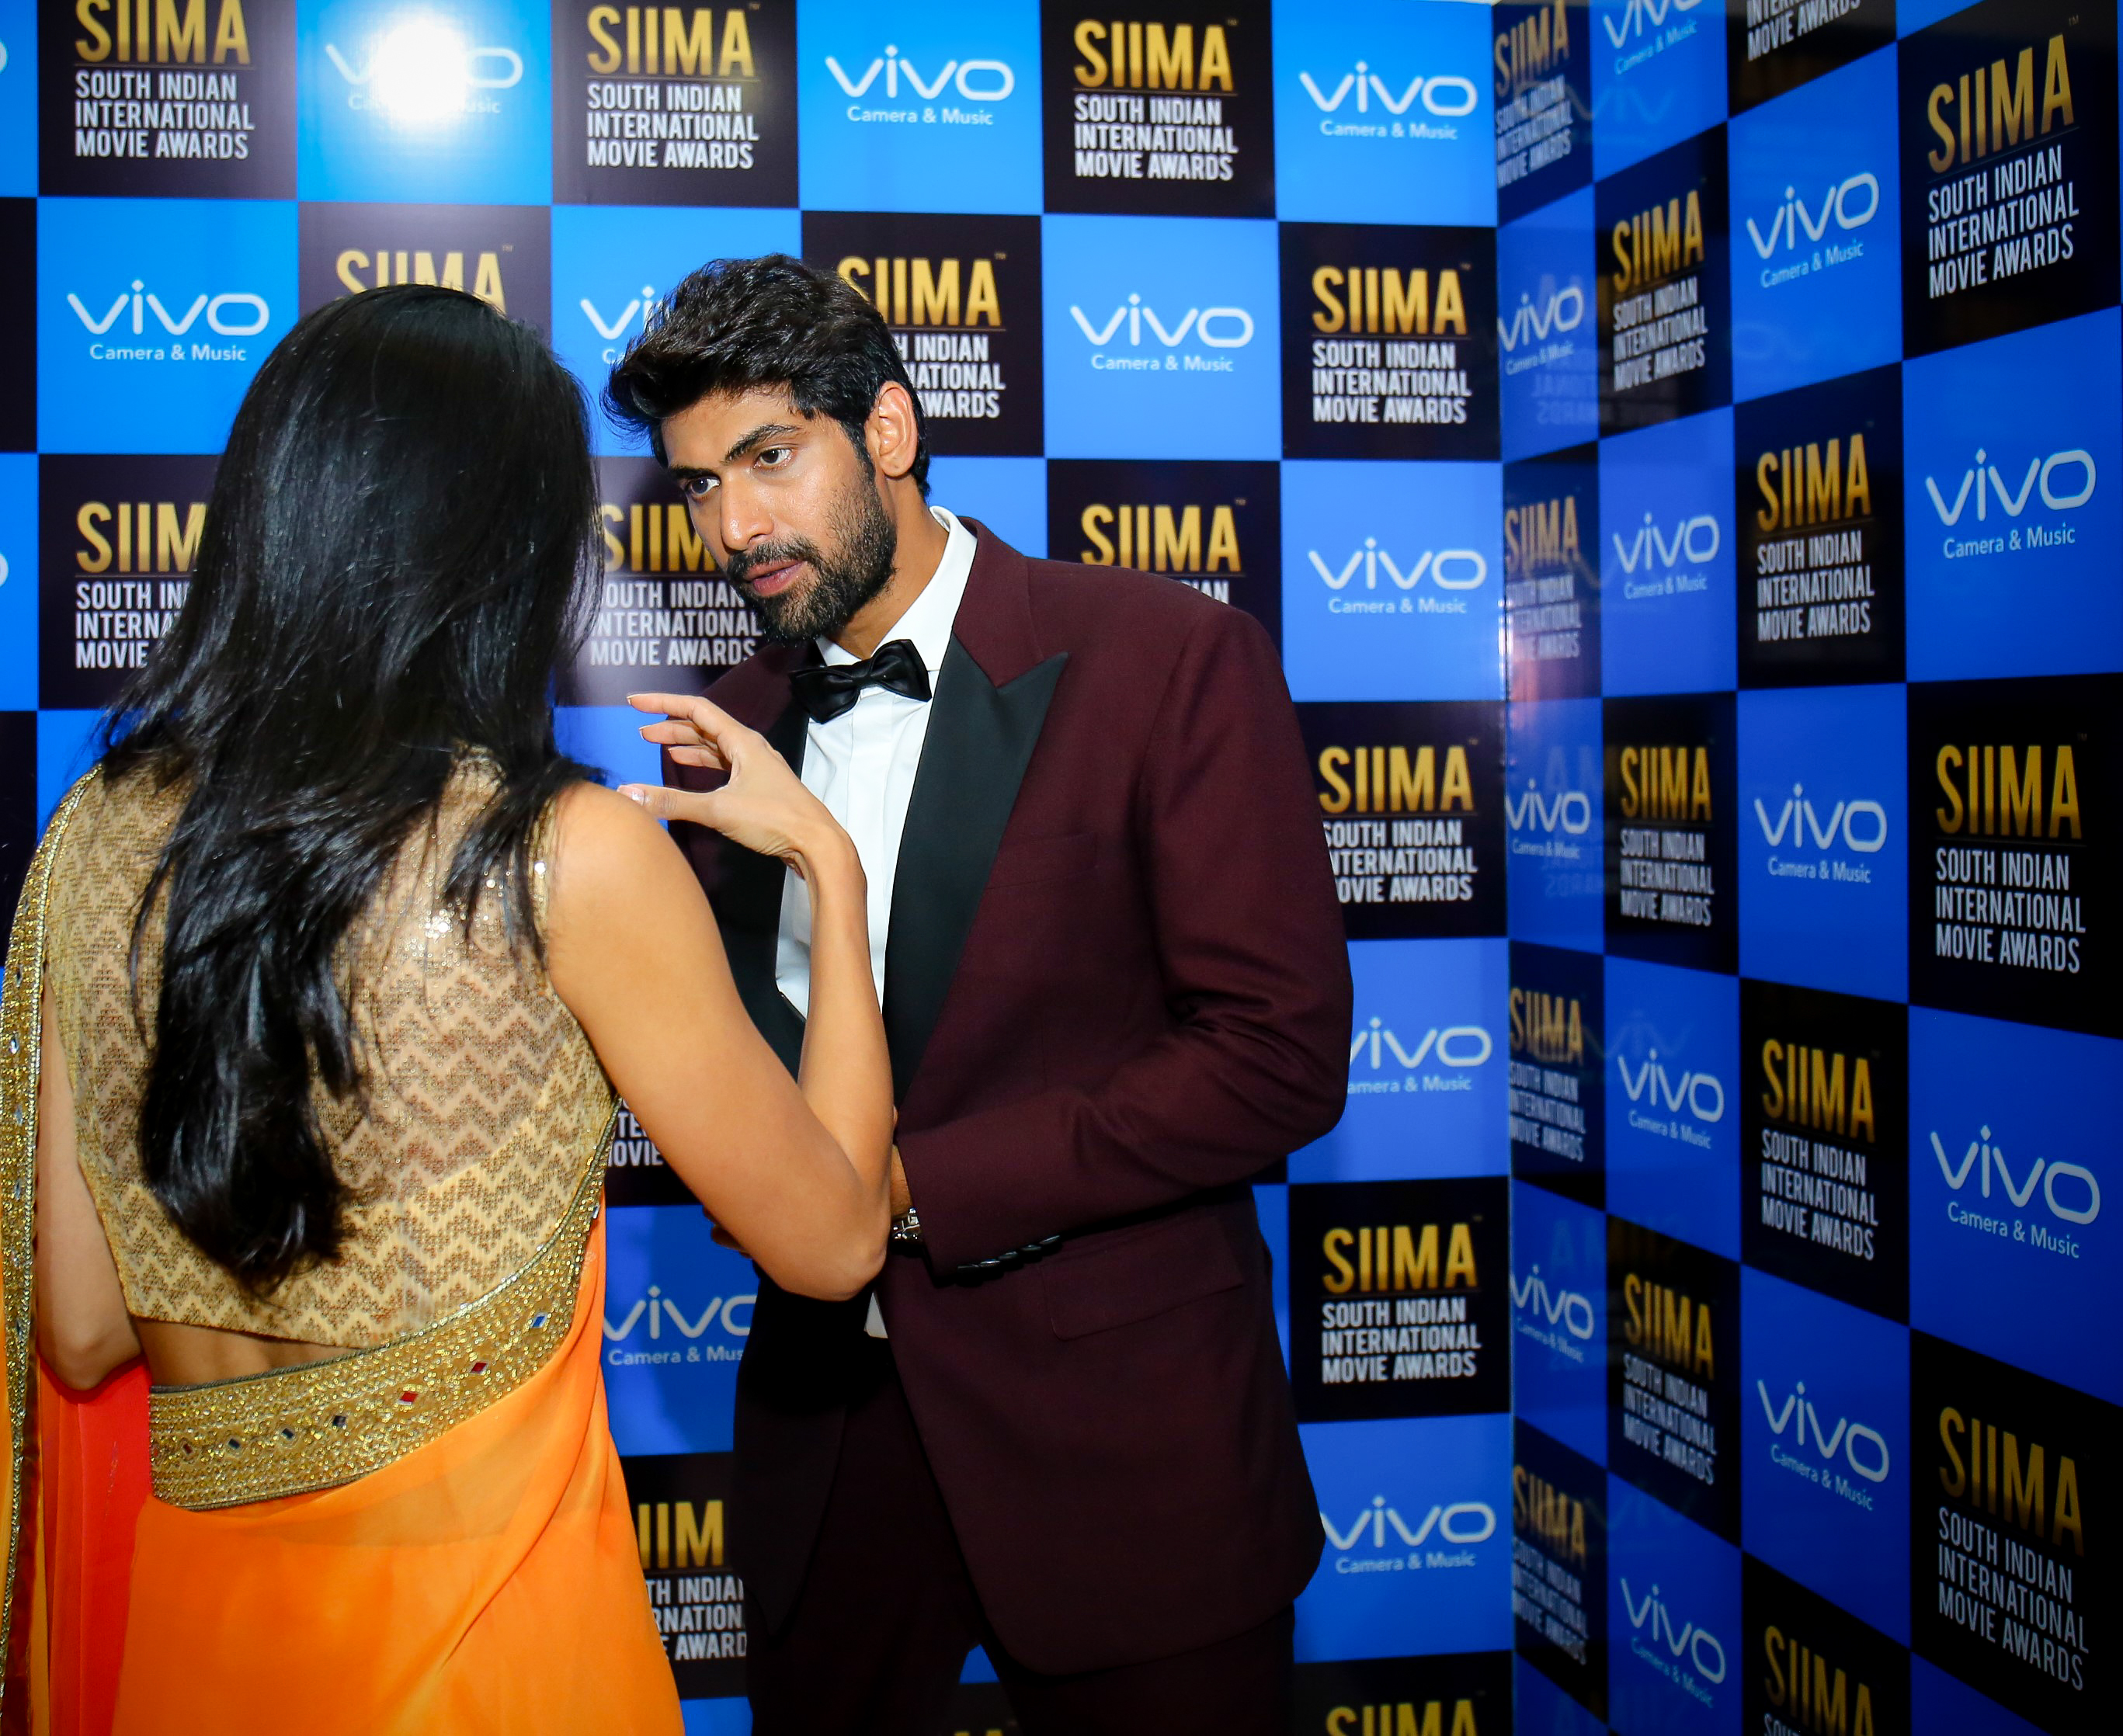 The South Indian International Movie Awards (SIIMA)